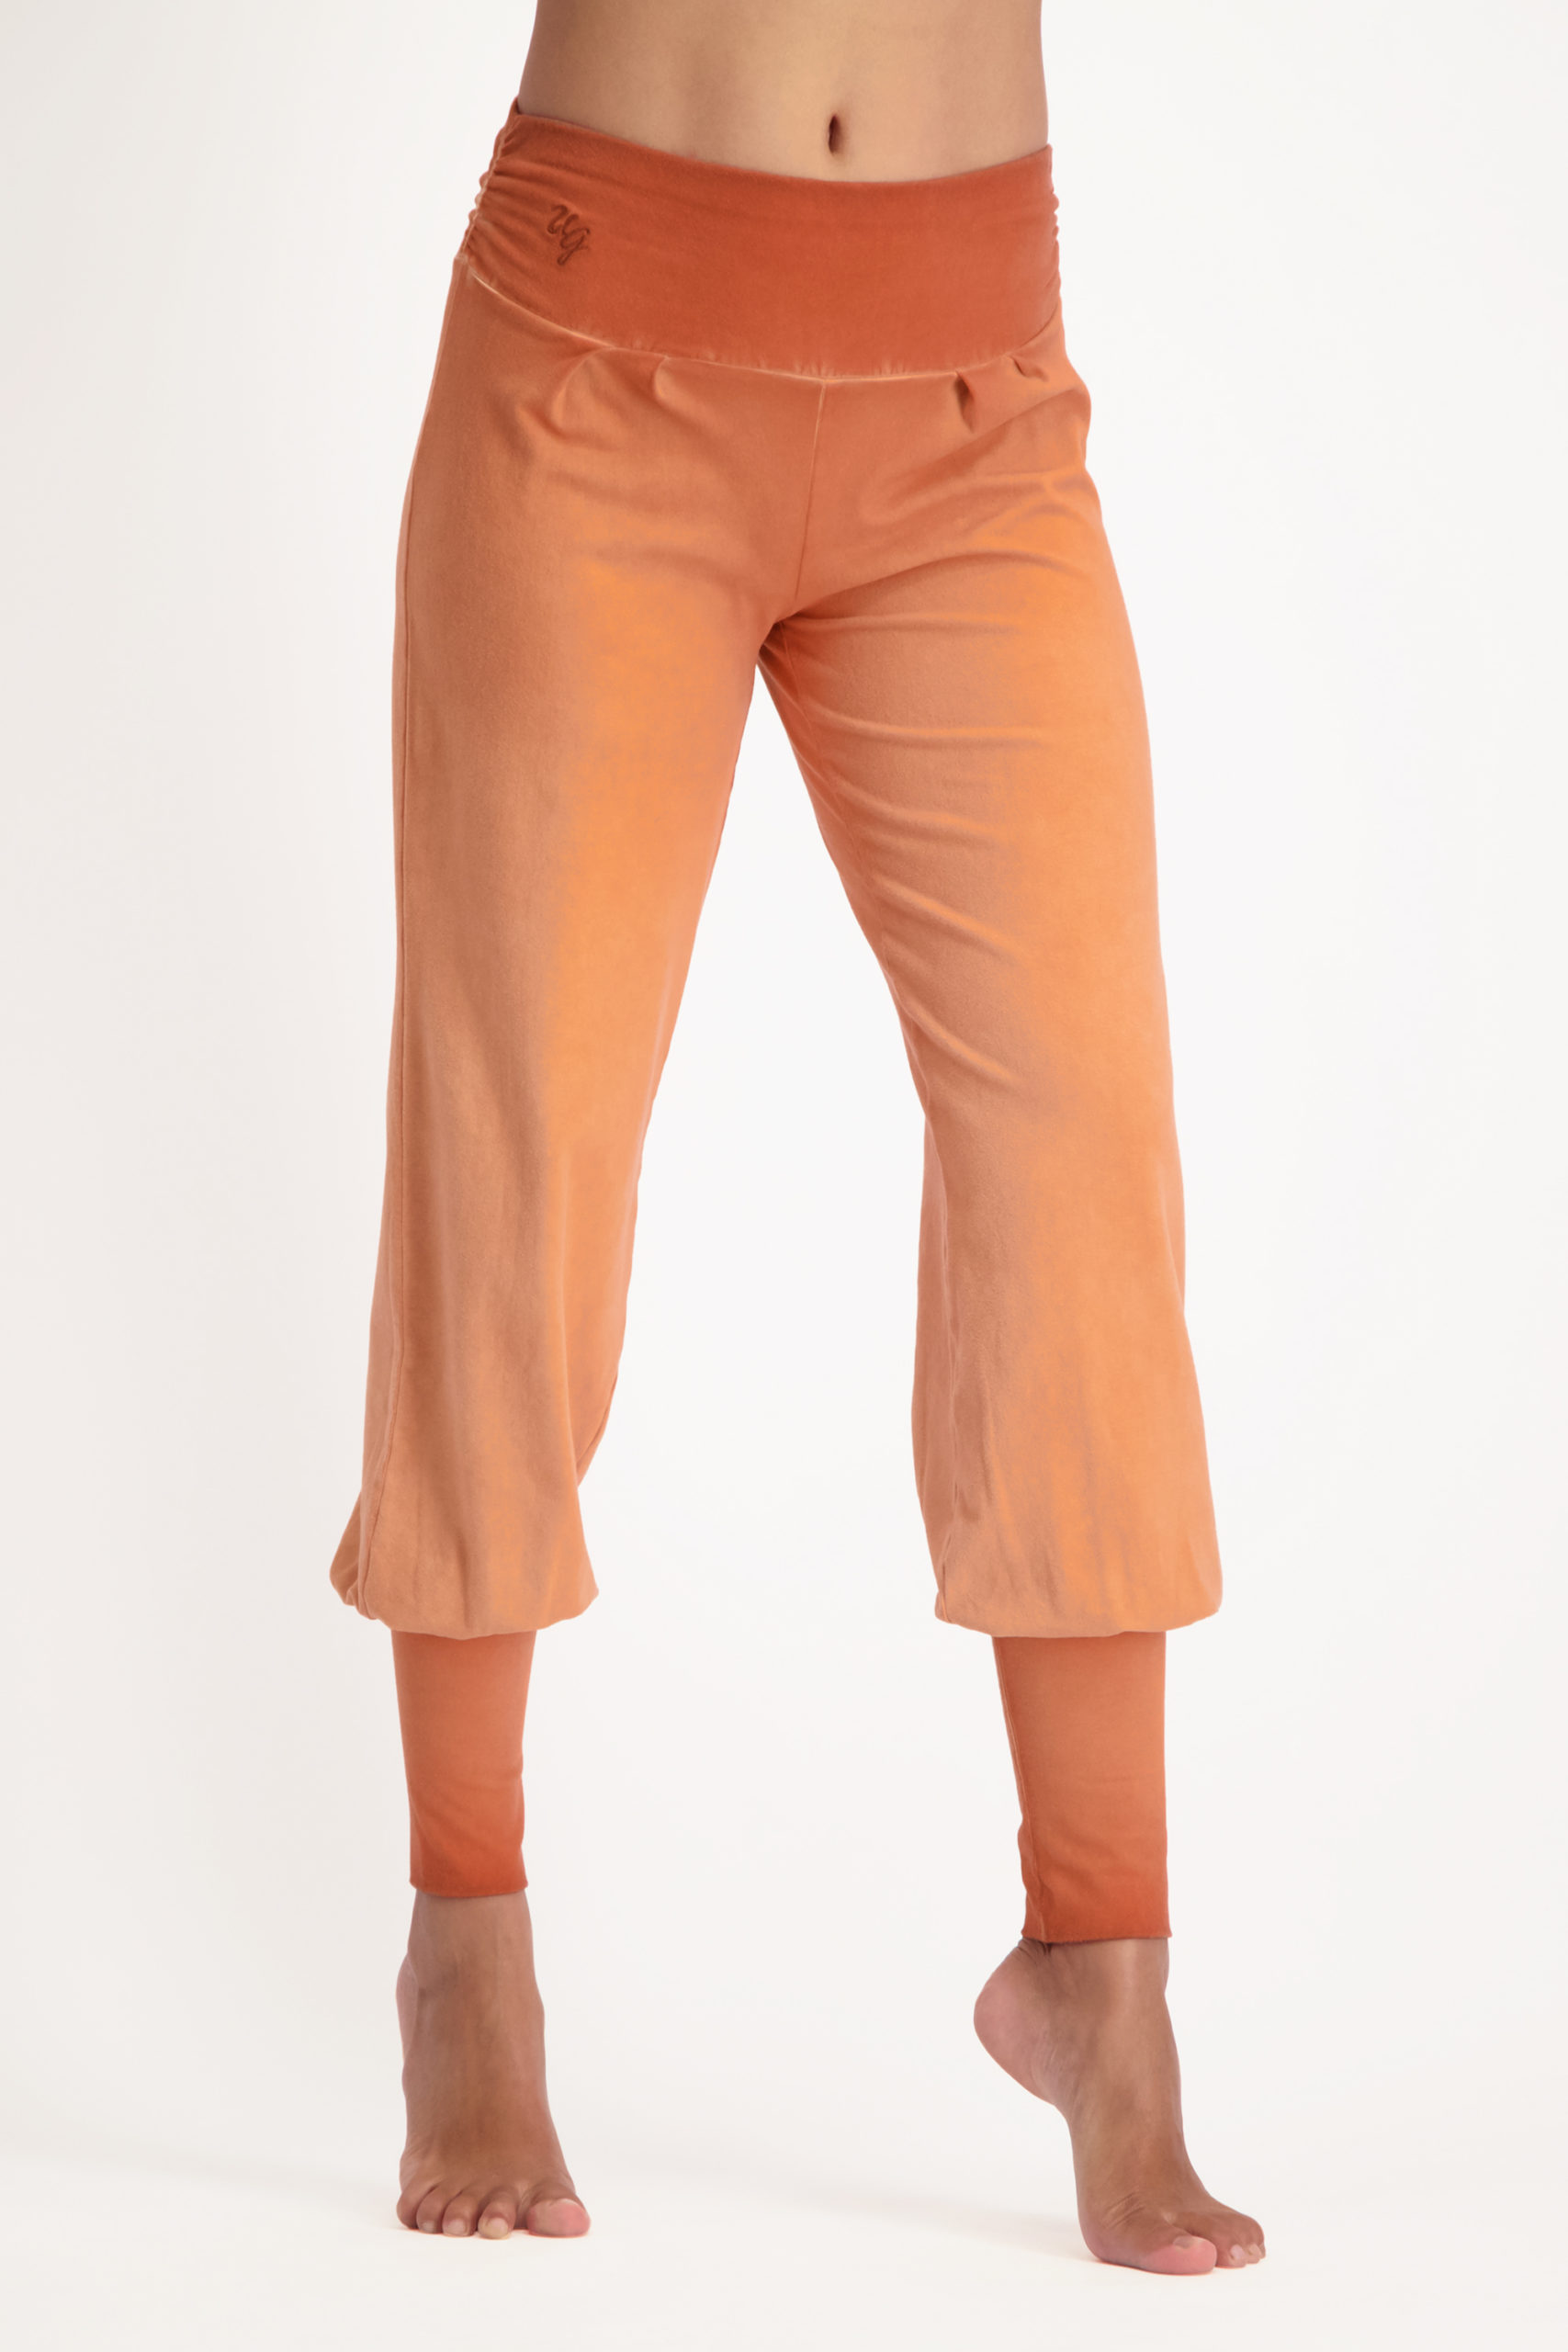 dakini pants-off Bombay brown-11095540-front-model_Fullbody_TIFF_1